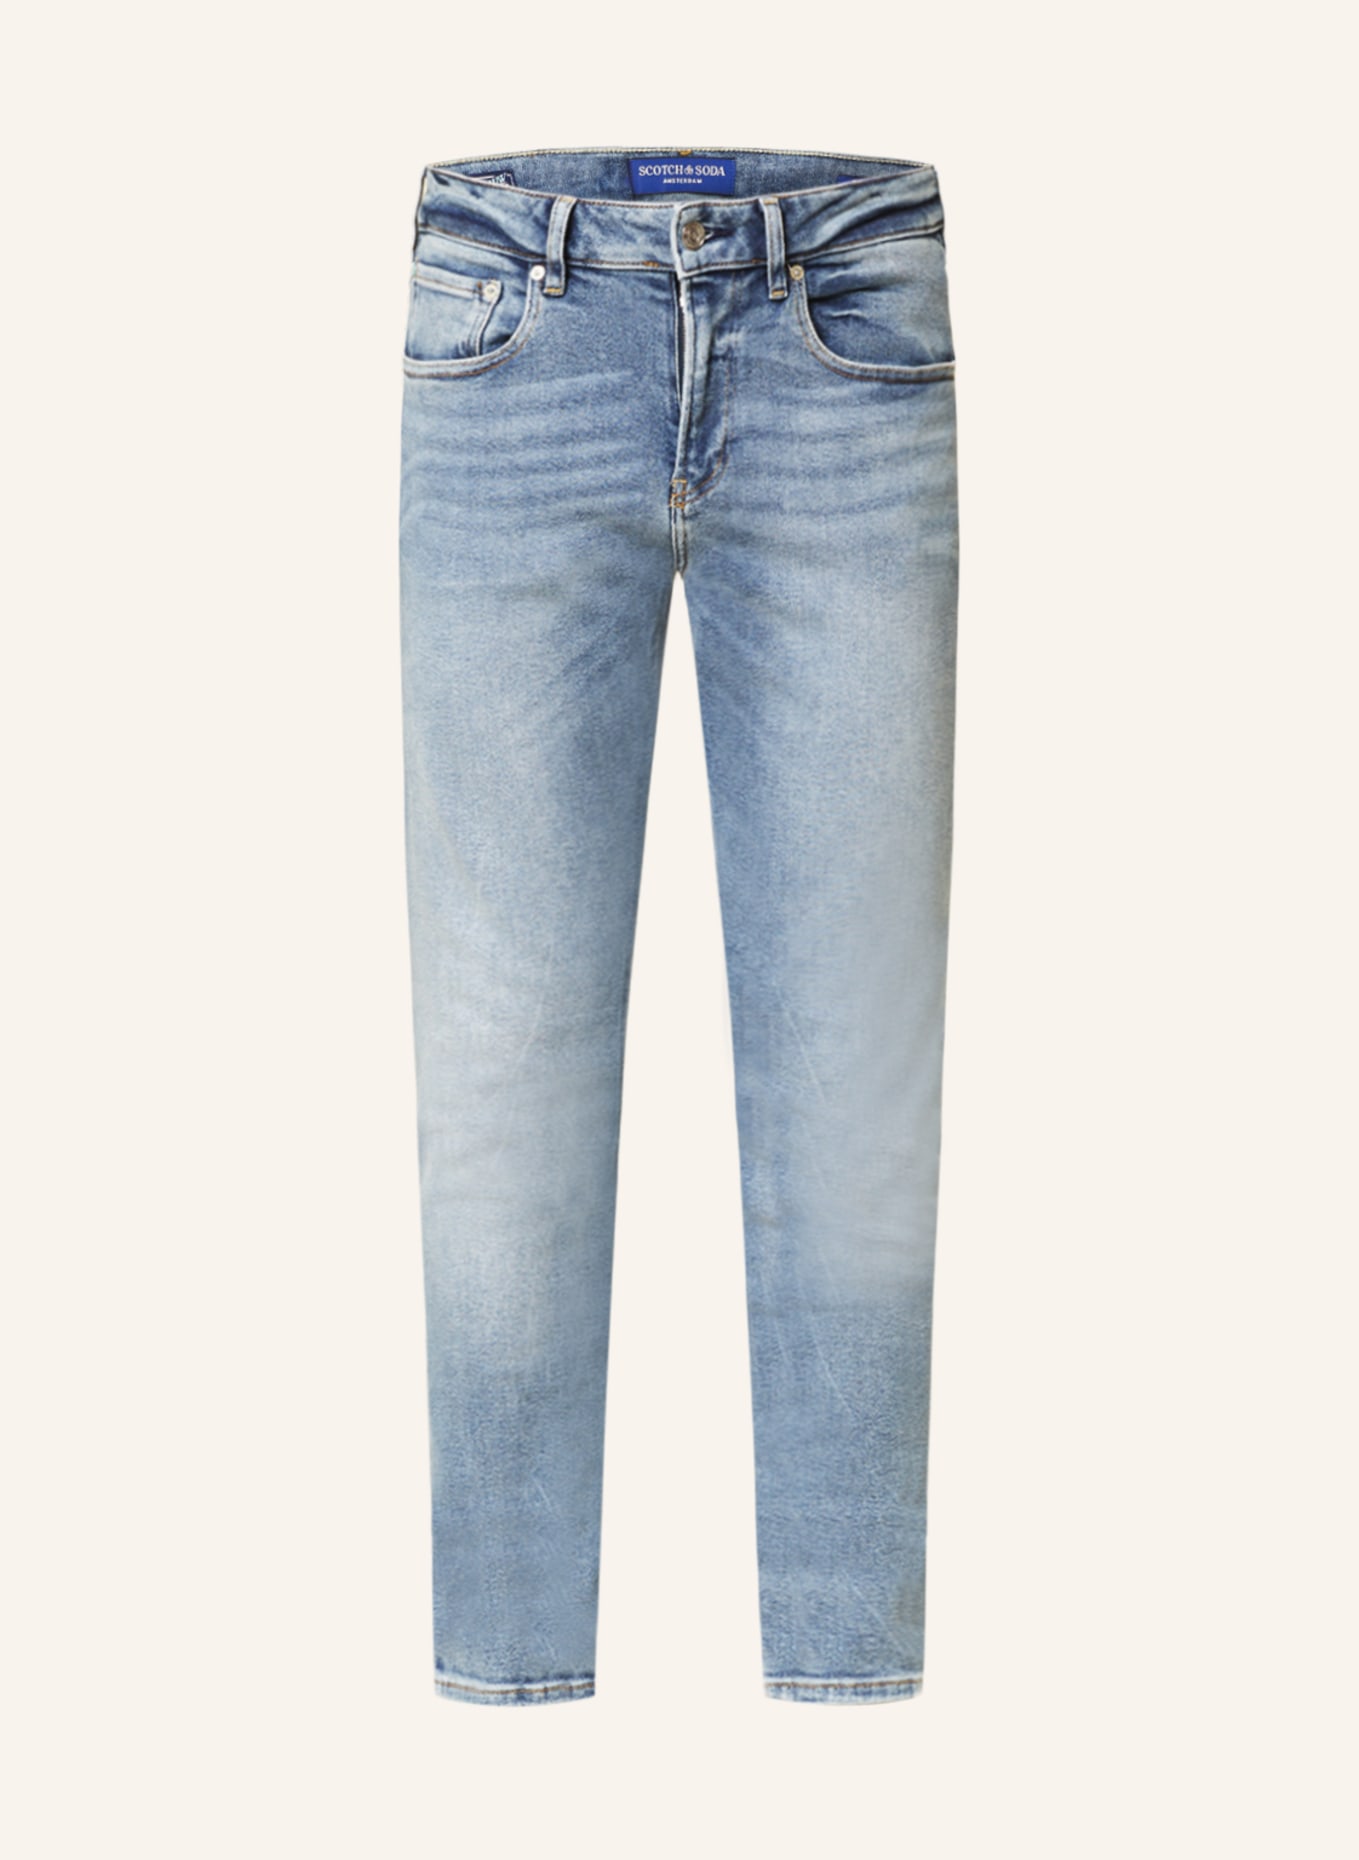 SCOTCH & SODA Jeans THE DROP Regular Tapered Fit, Farbe: 3625 Aqua Blue (Bild 1)